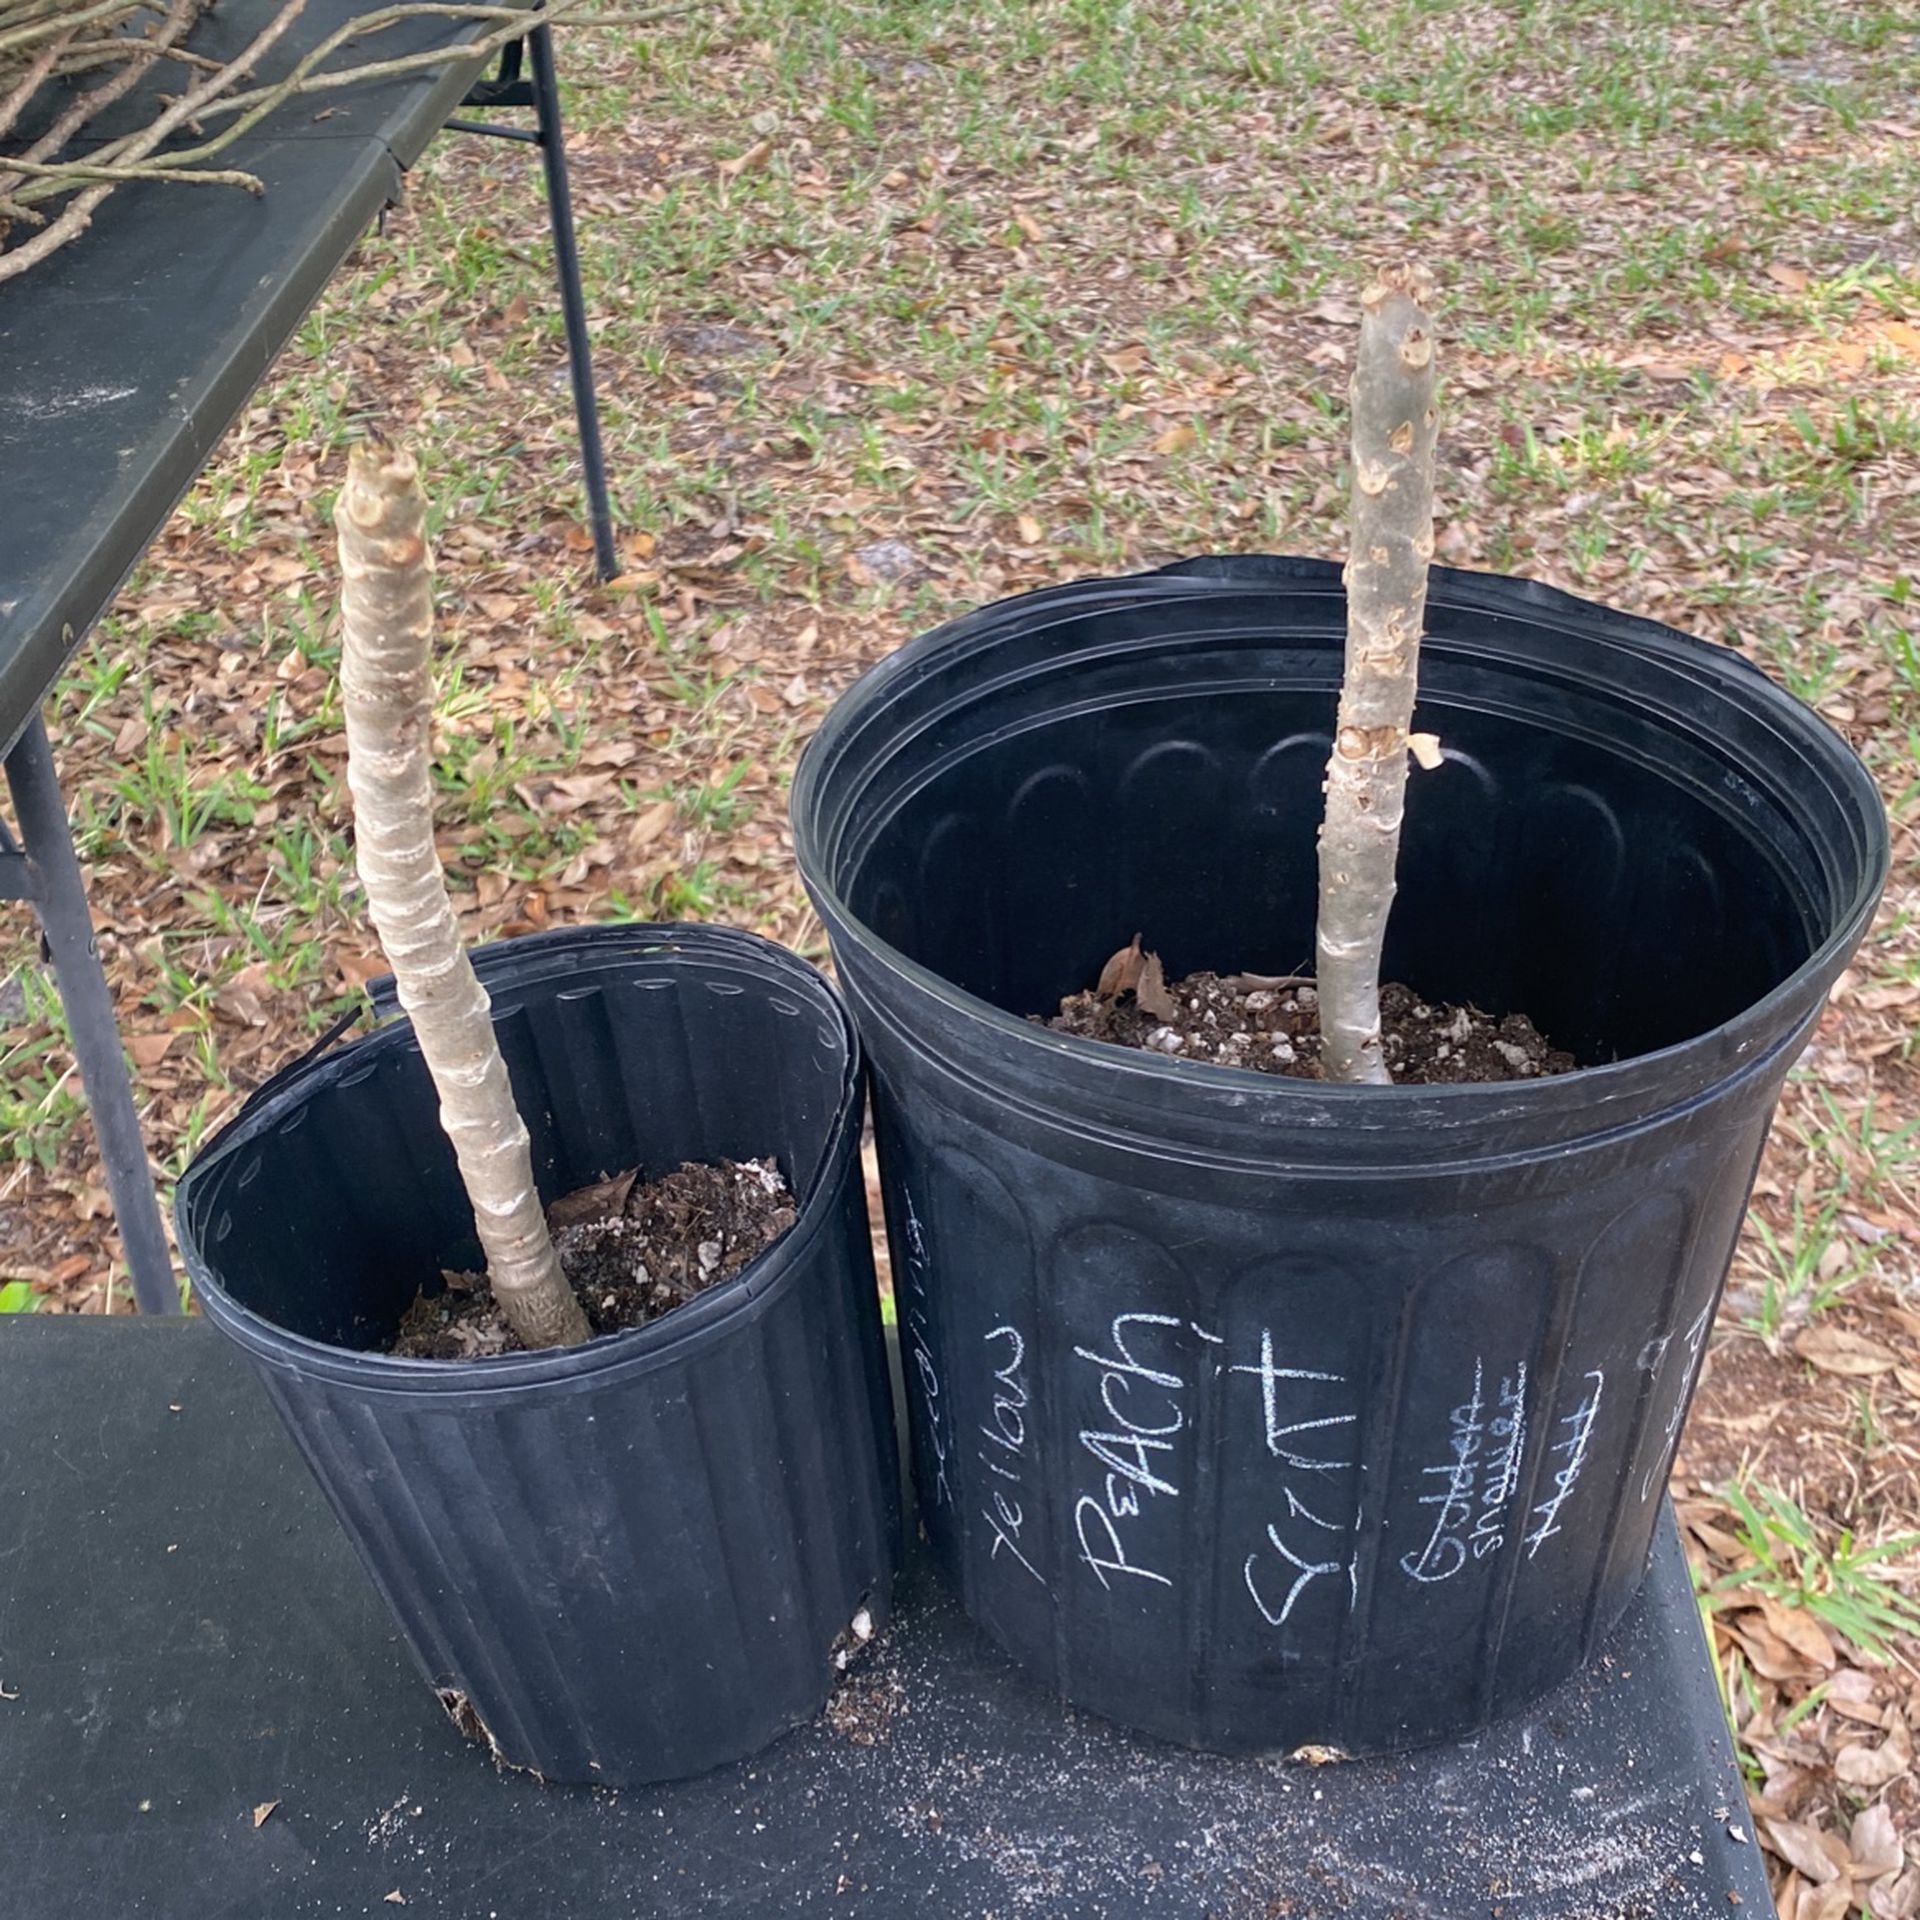 Surprise plumeria Seedlings over 2 yrs old 